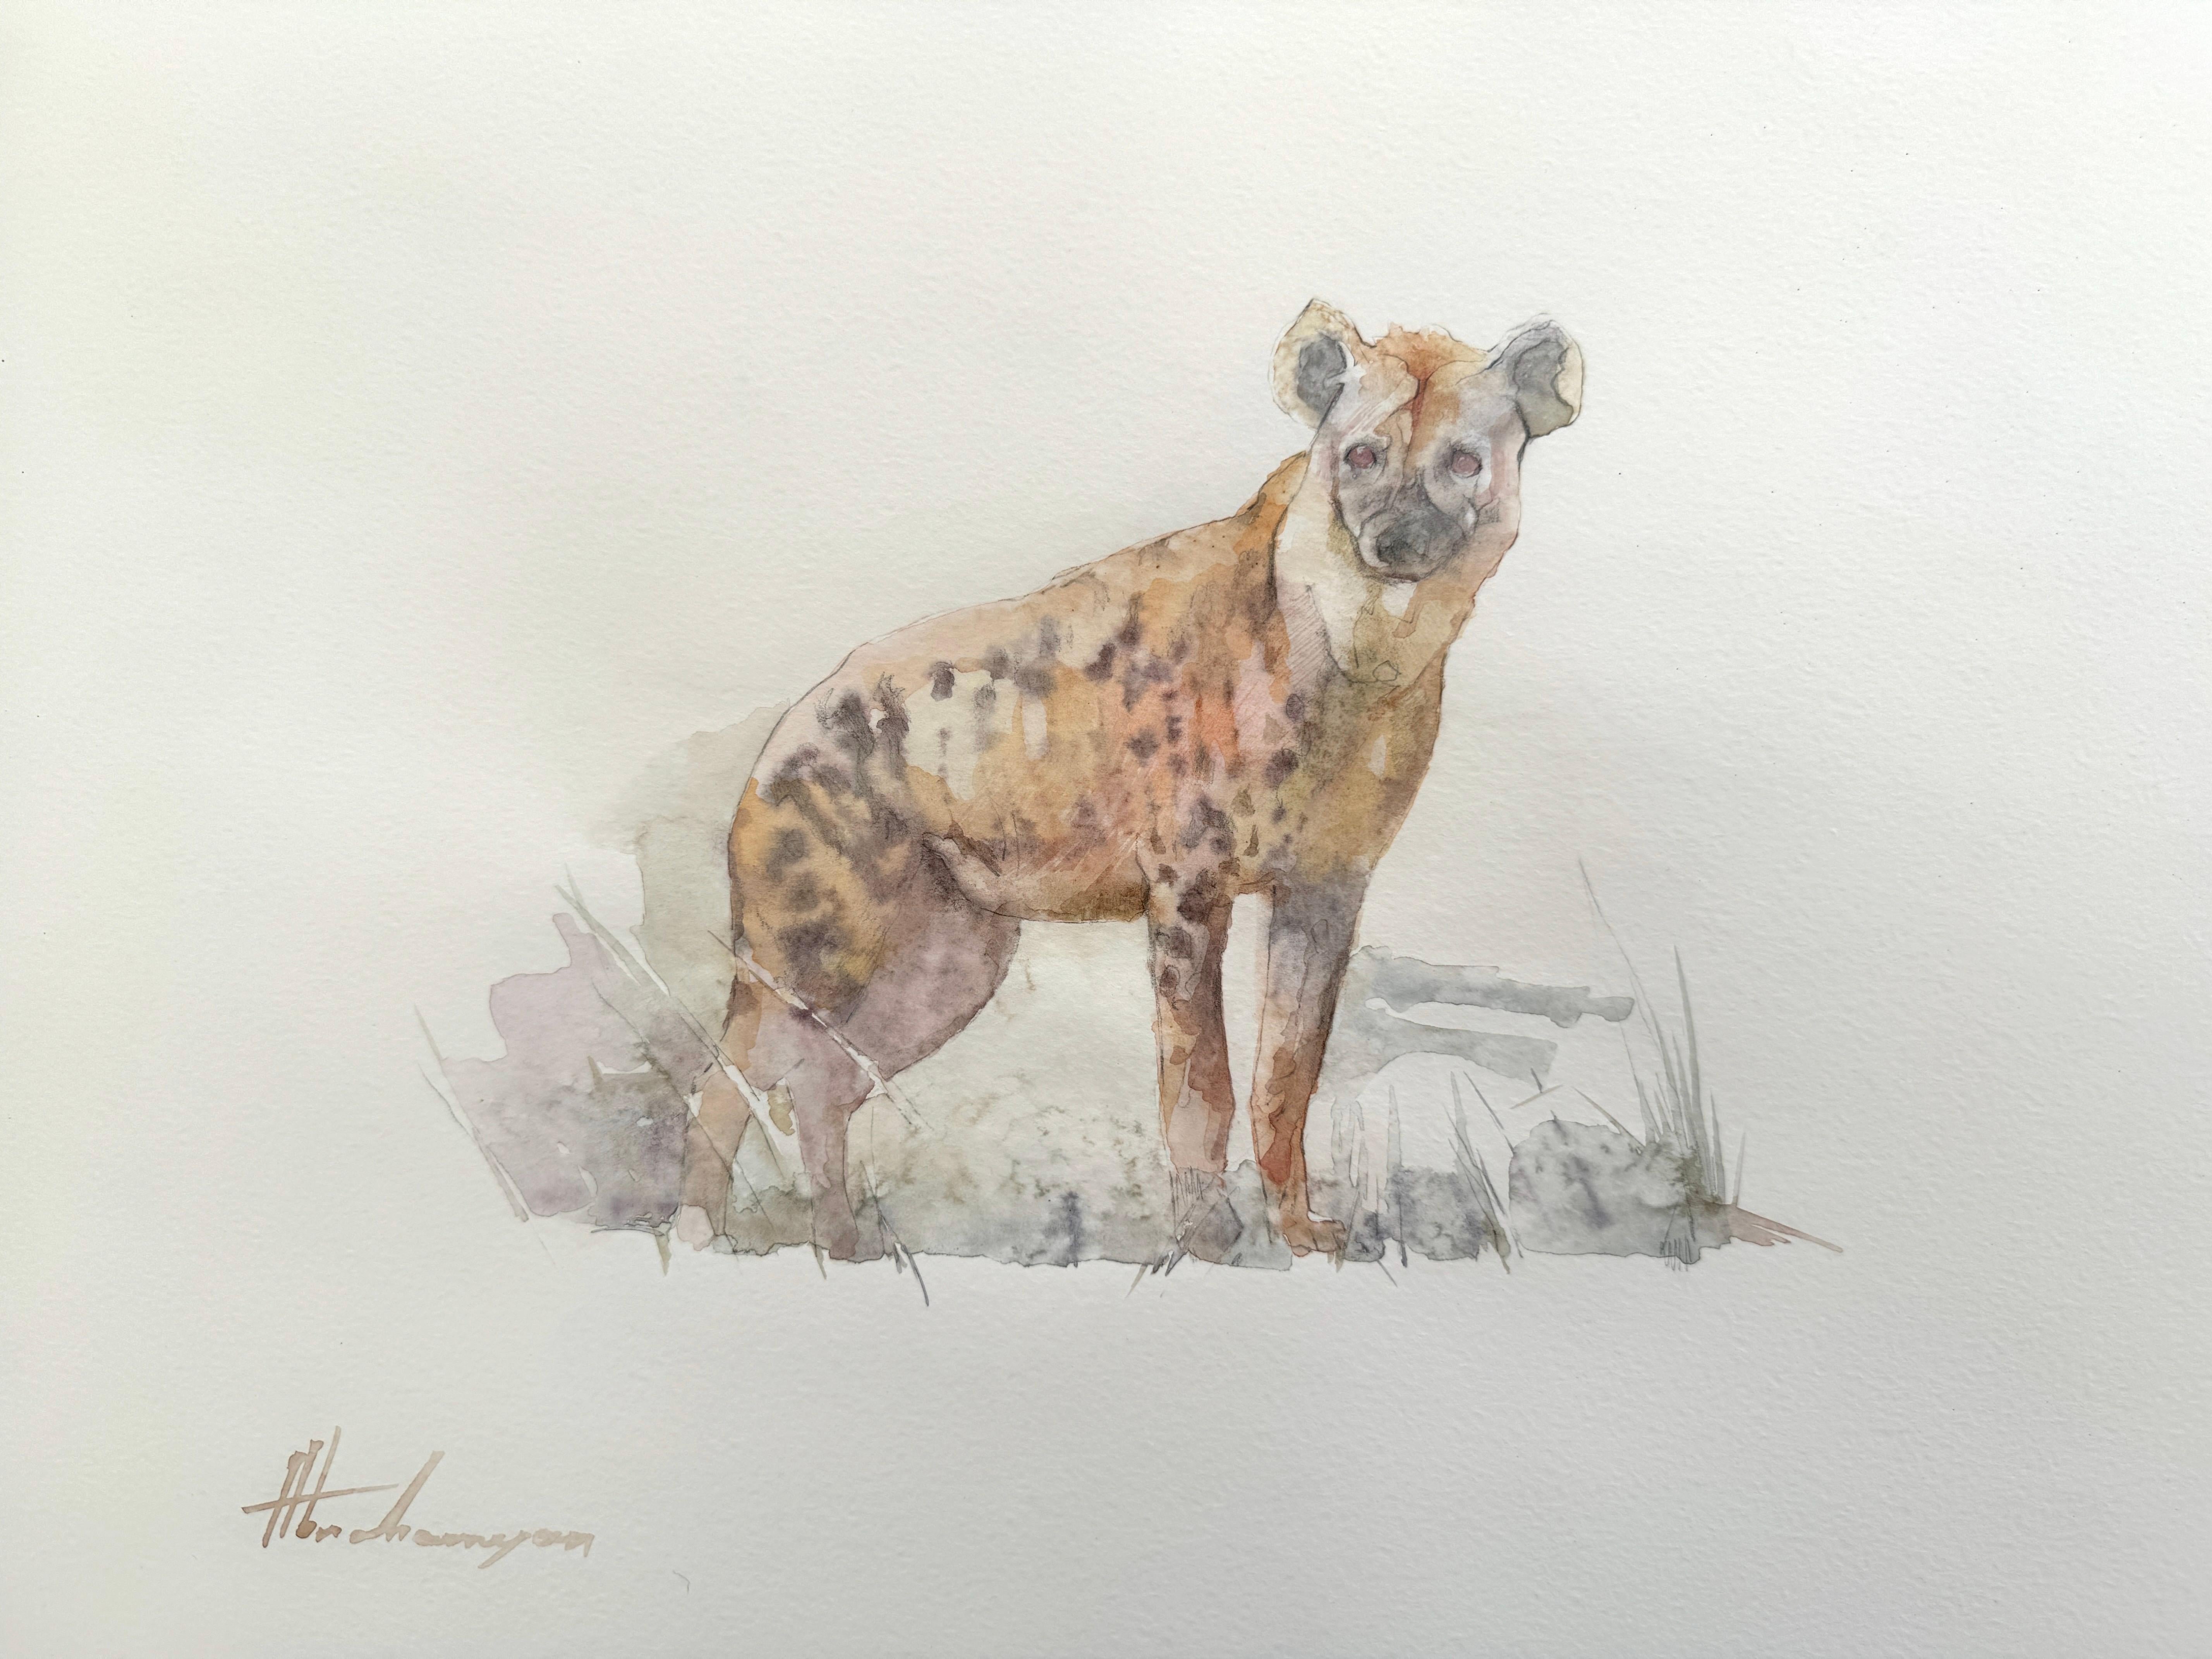 Artyom Abrahamyan Animal Art - Hyena, Wild Animal, Watercolor on Paper, Handmade Painting, One of a Kind